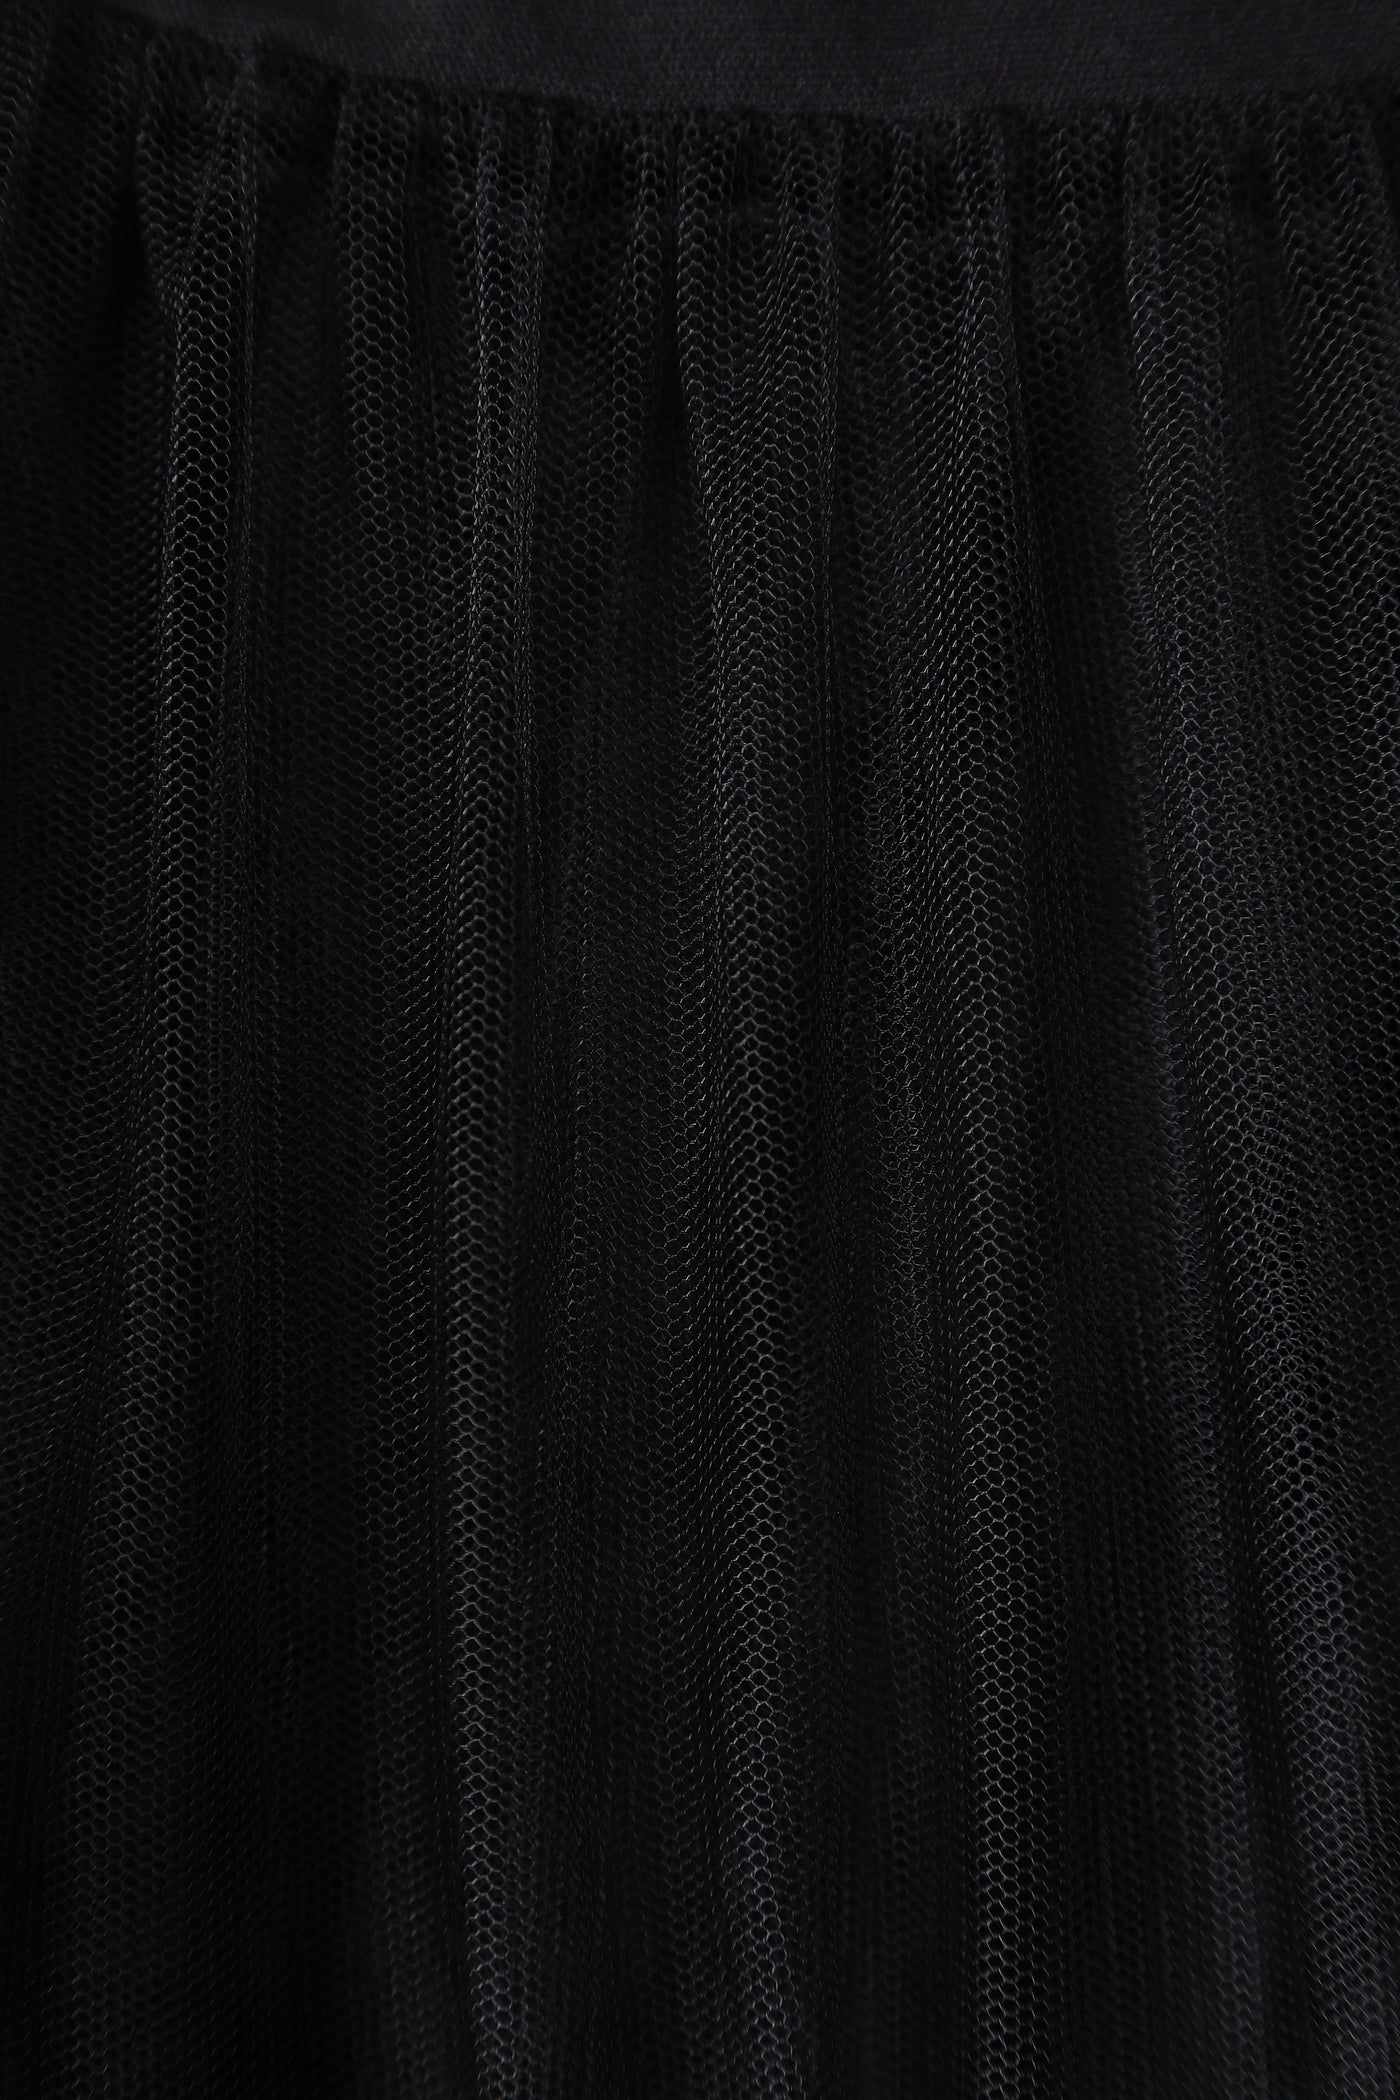 Fluffy Black Petticoat